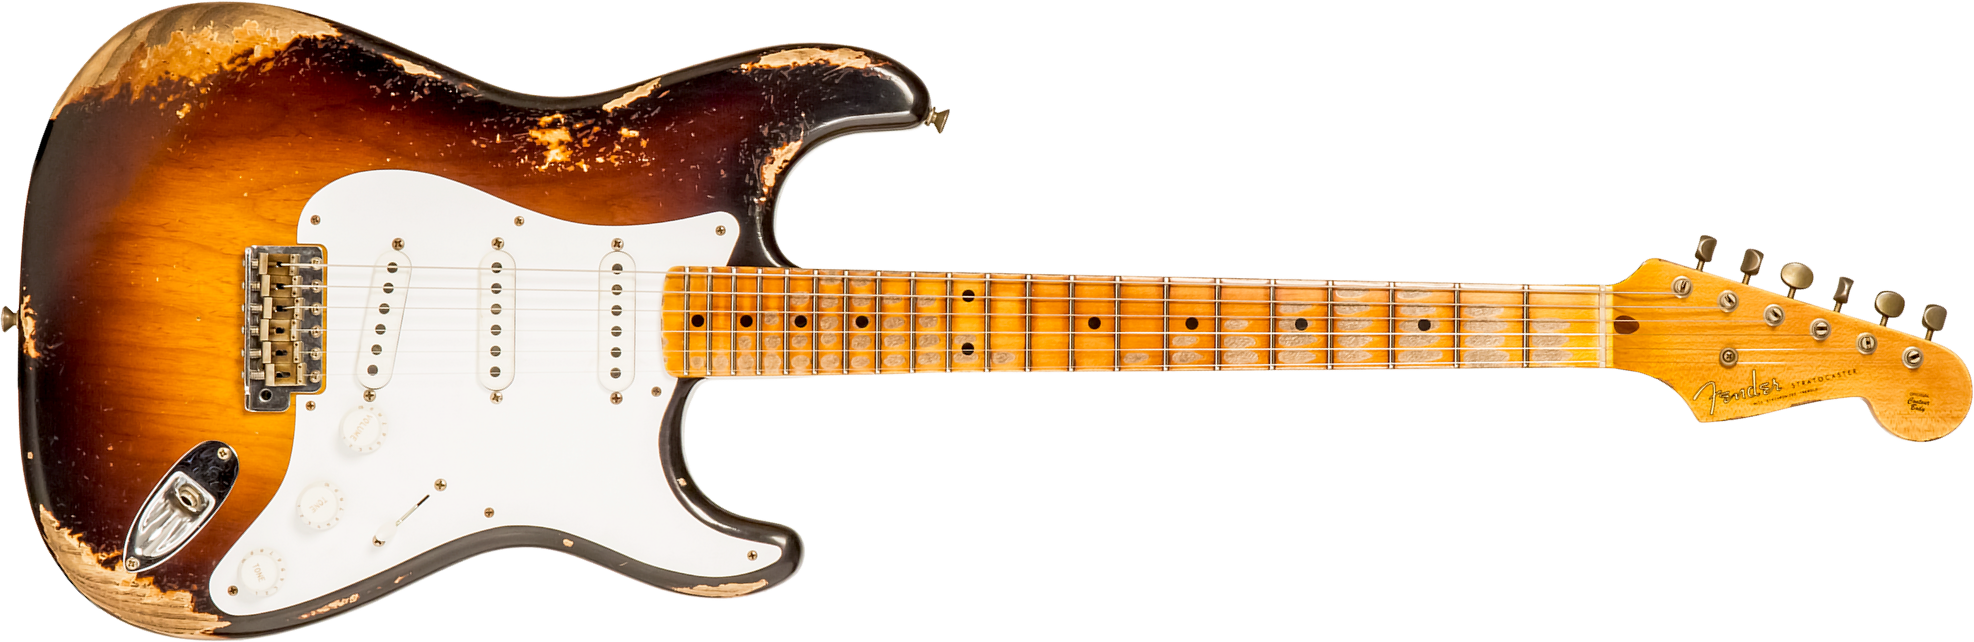 Fender Custom Shop Strat 1954 70th Anniv. 3s Trem Mn #xn4324 - Heavy Relic Wide Fade 2-color Sunburst - Str shape electric guitar - Main picture